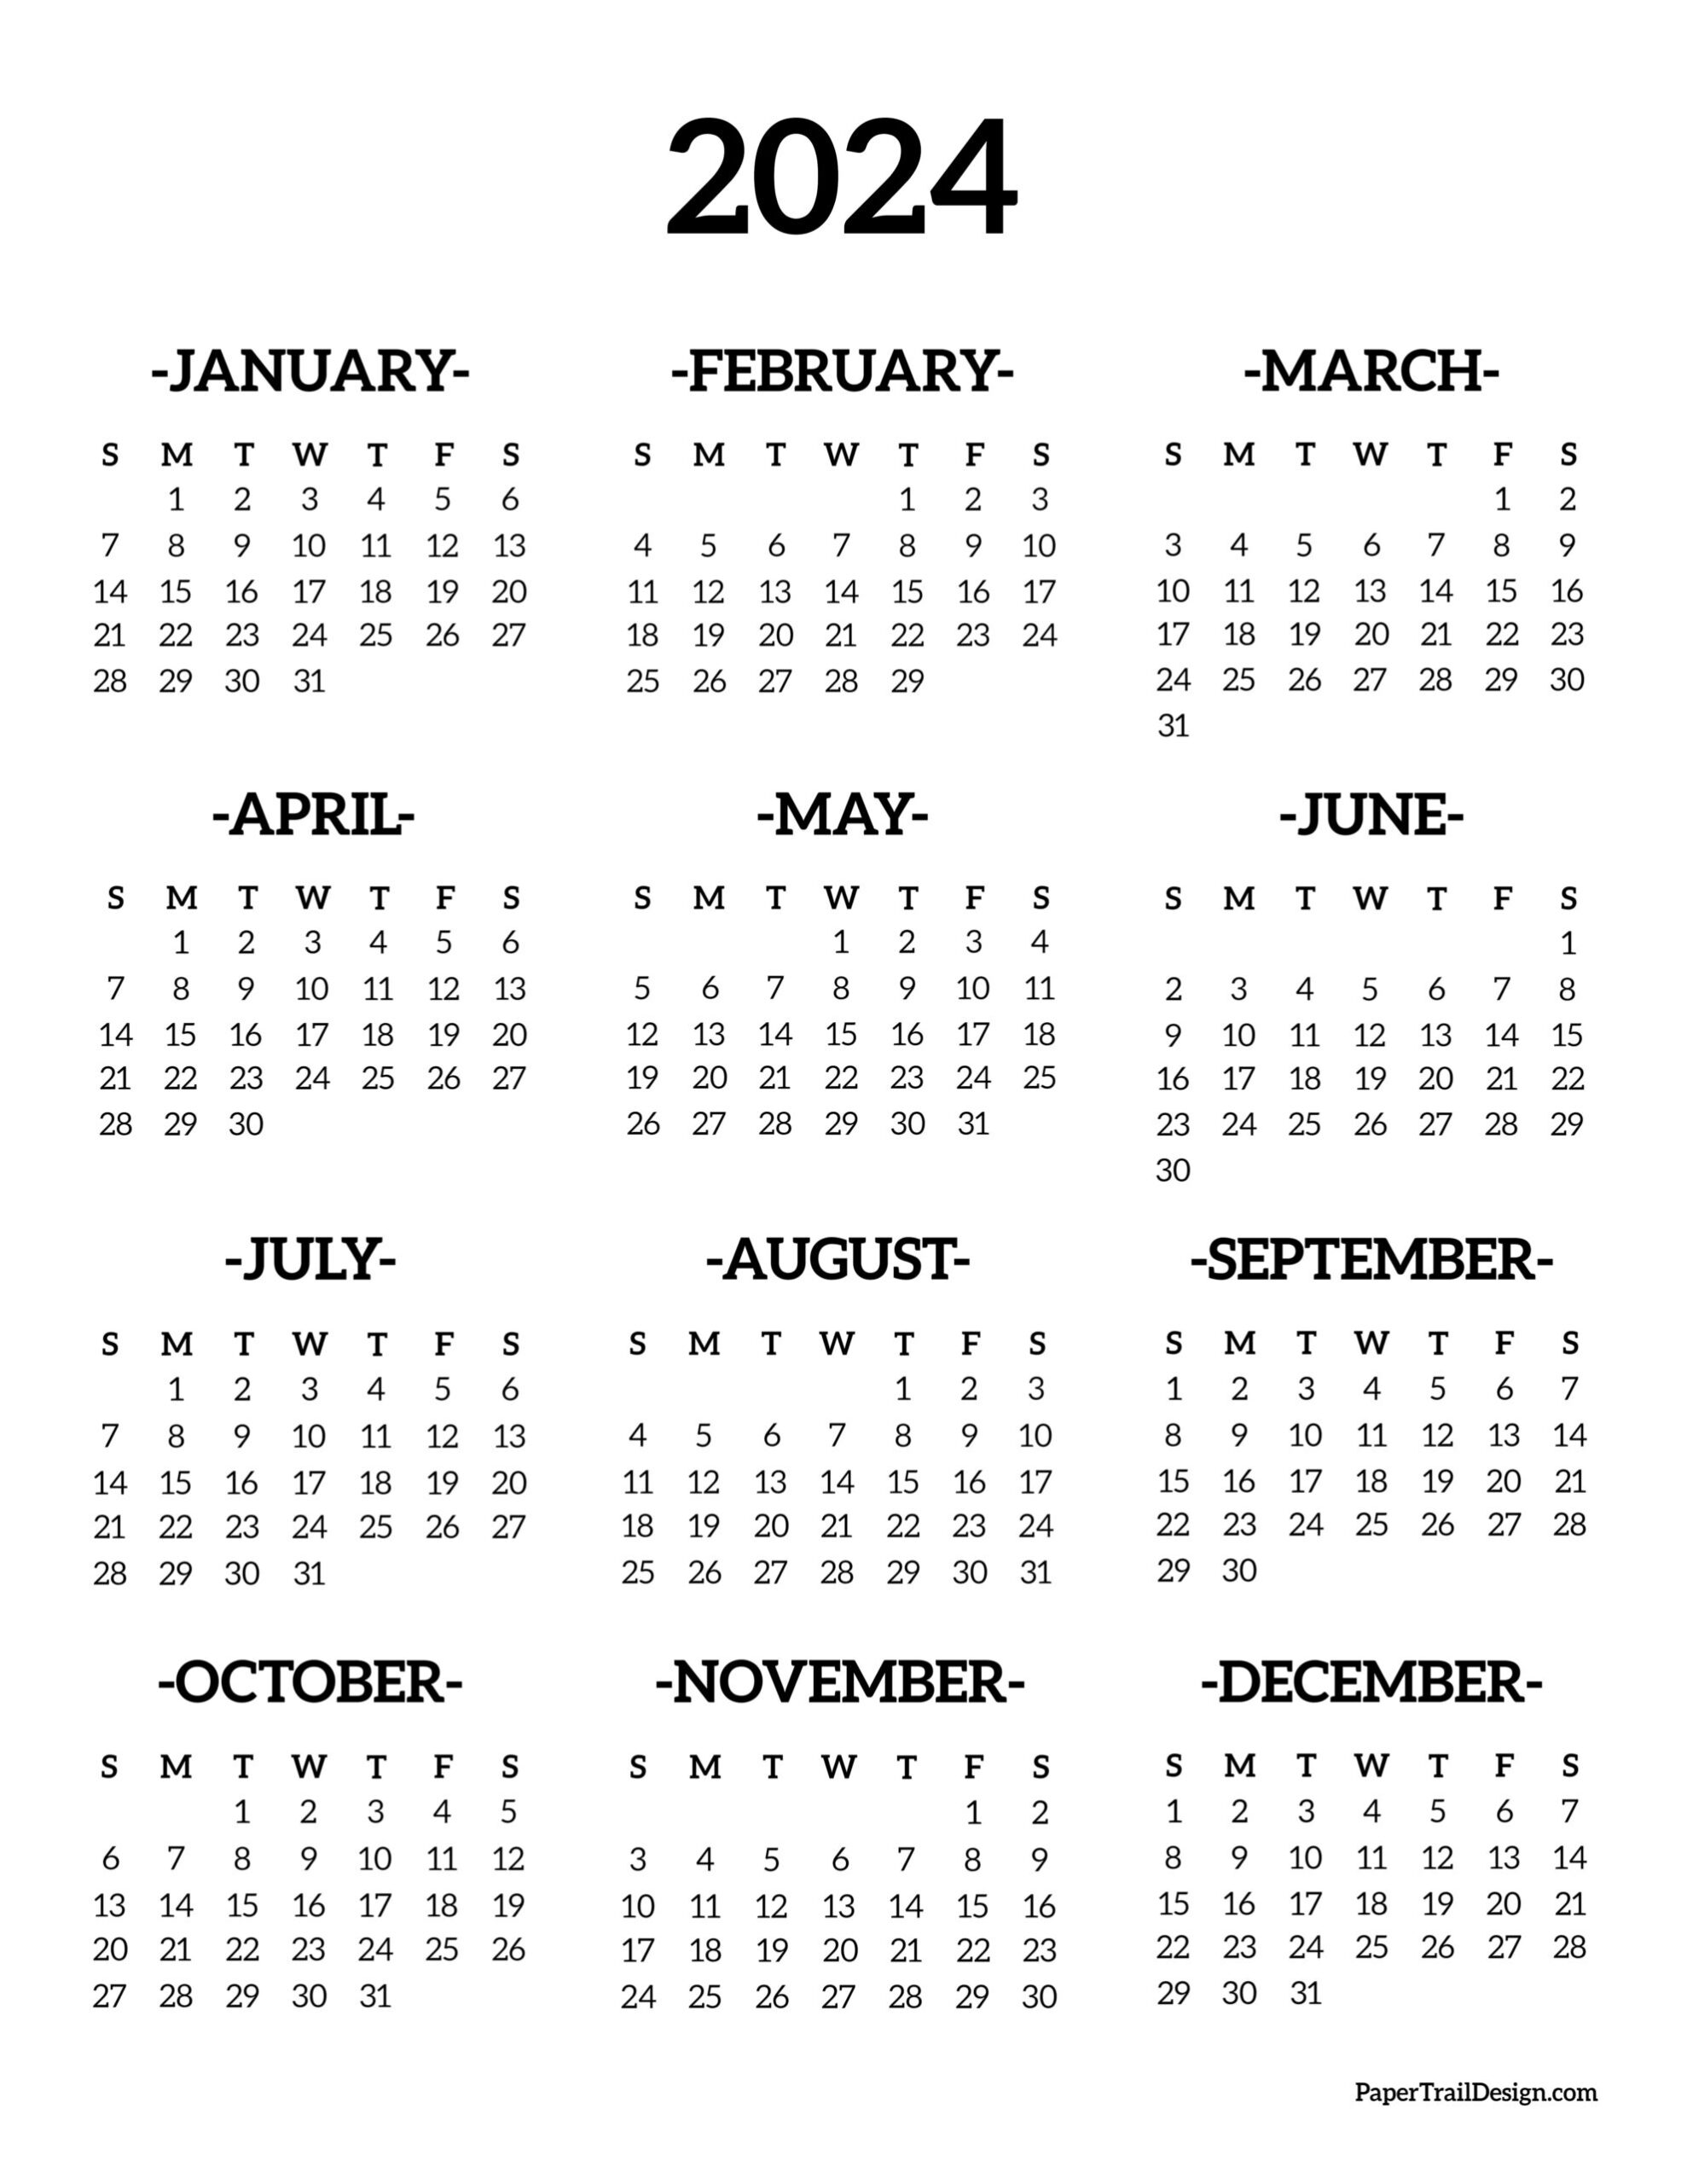 Calendar 2024 Printable One Page - Paper Trail Design | Print A Calendar 2024